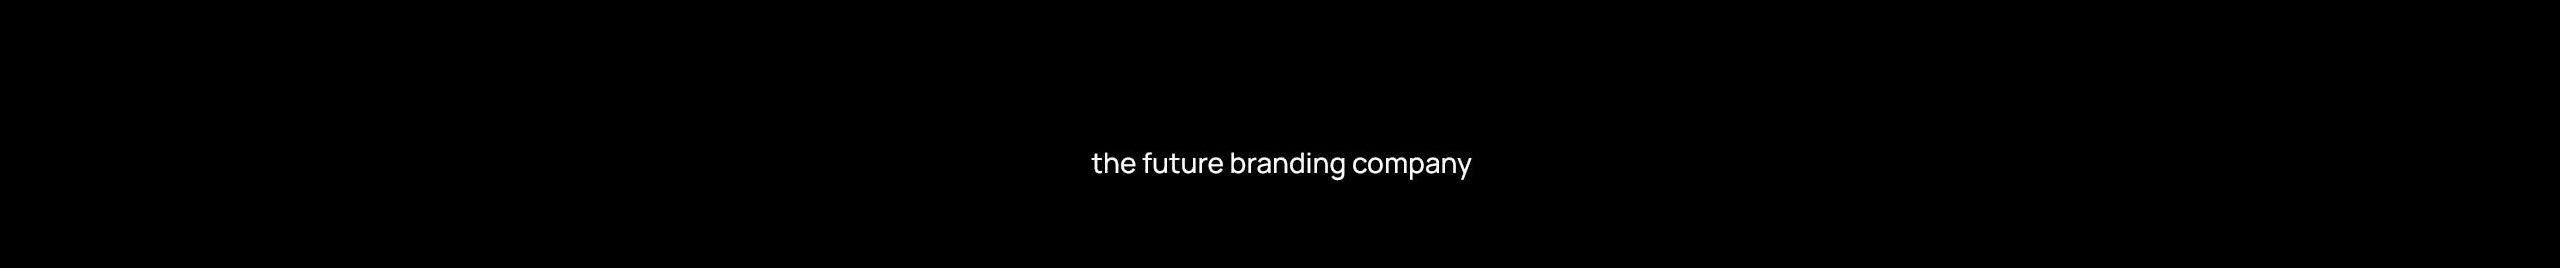 Ybrands Dubai's profile banner